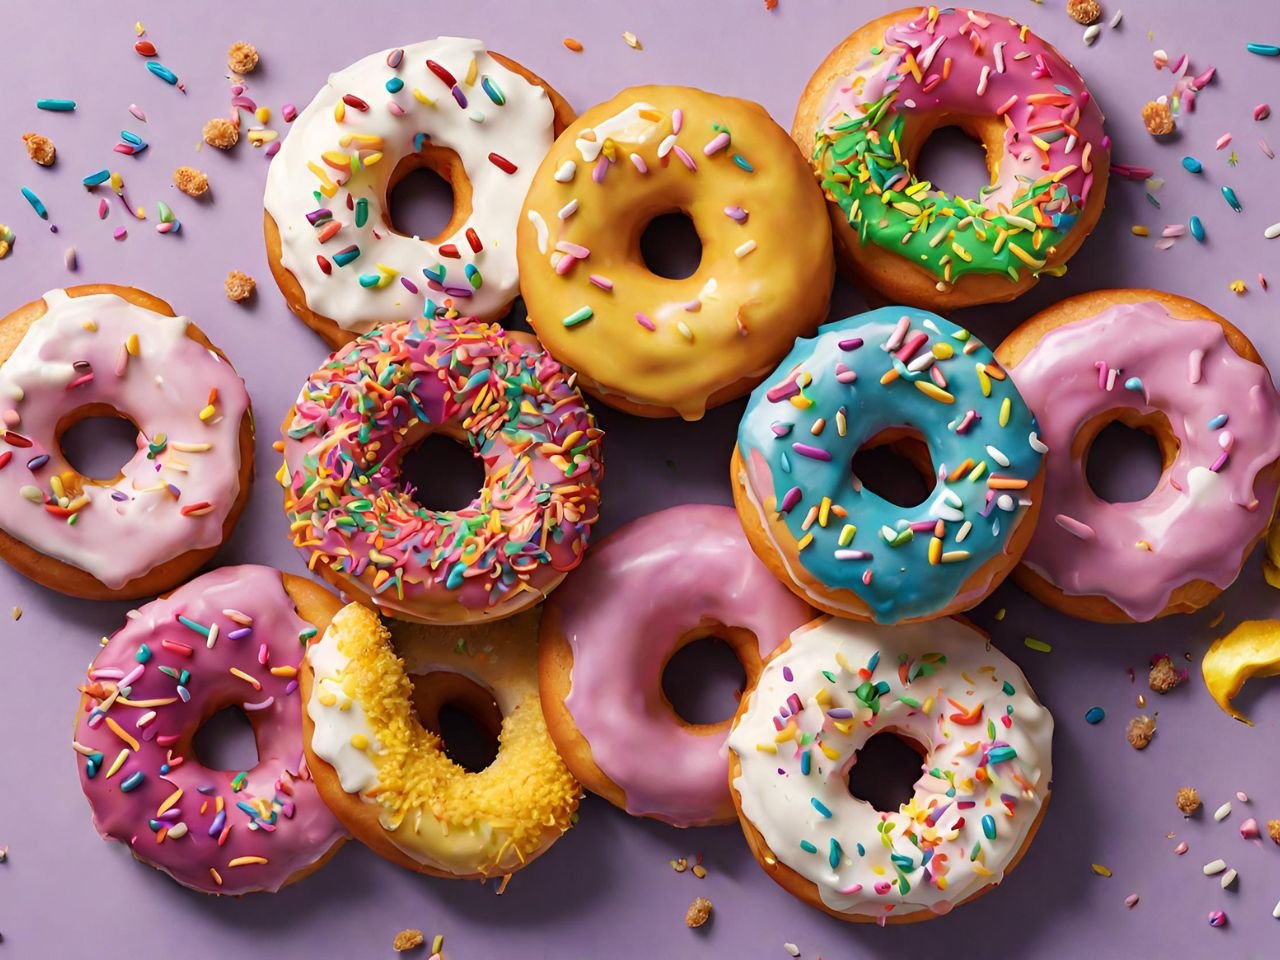 The 10 Best Gluten Free Donuts Brands 0